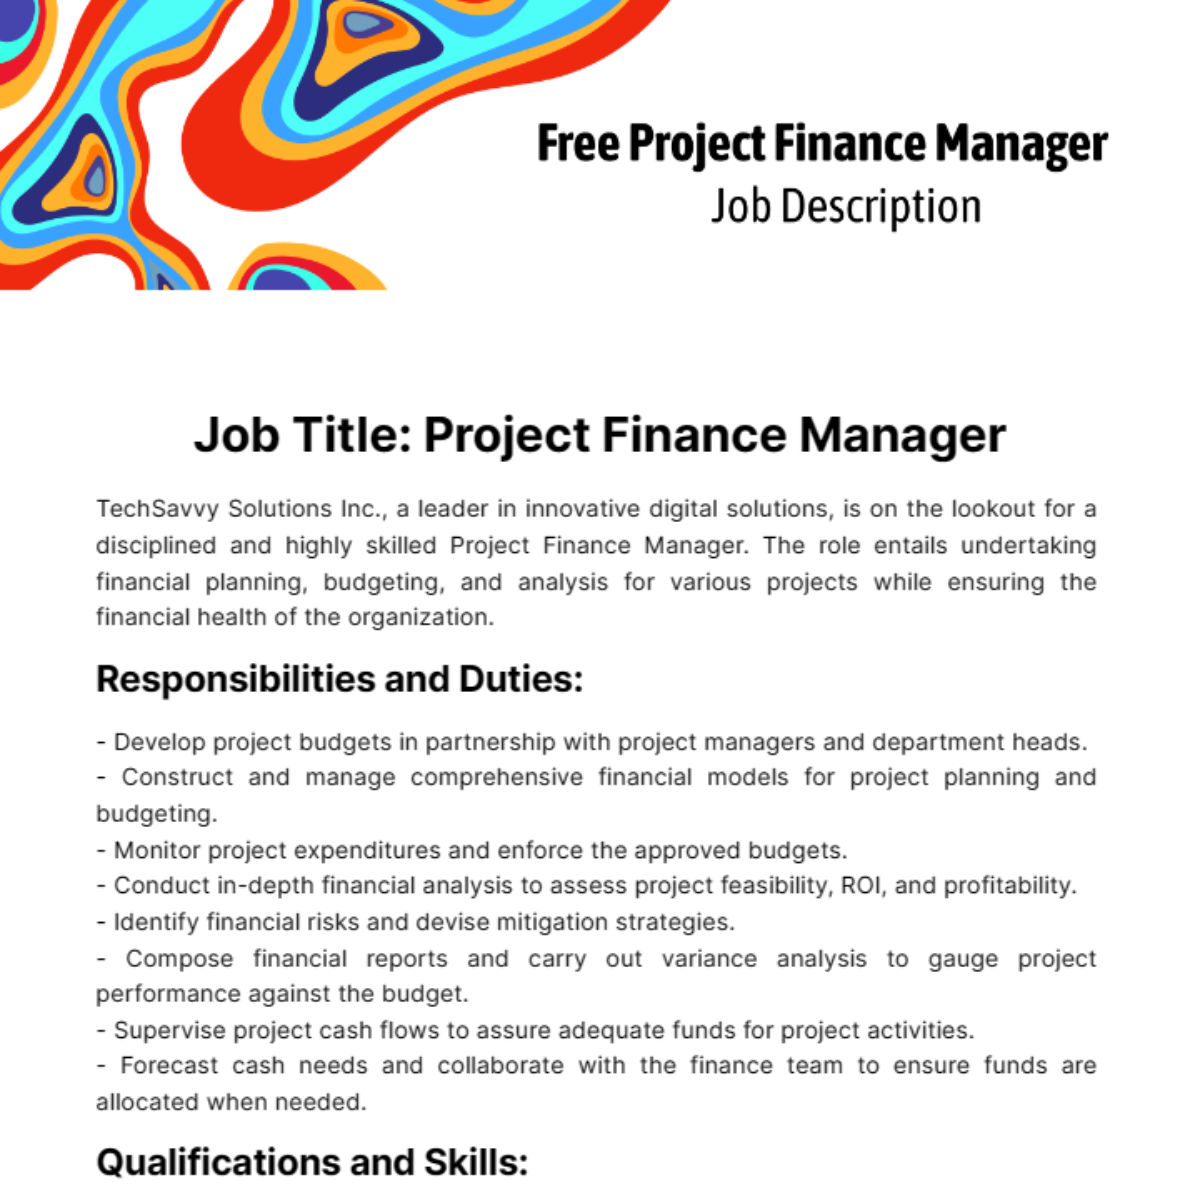 Free Project Finance Manager Job Description Template